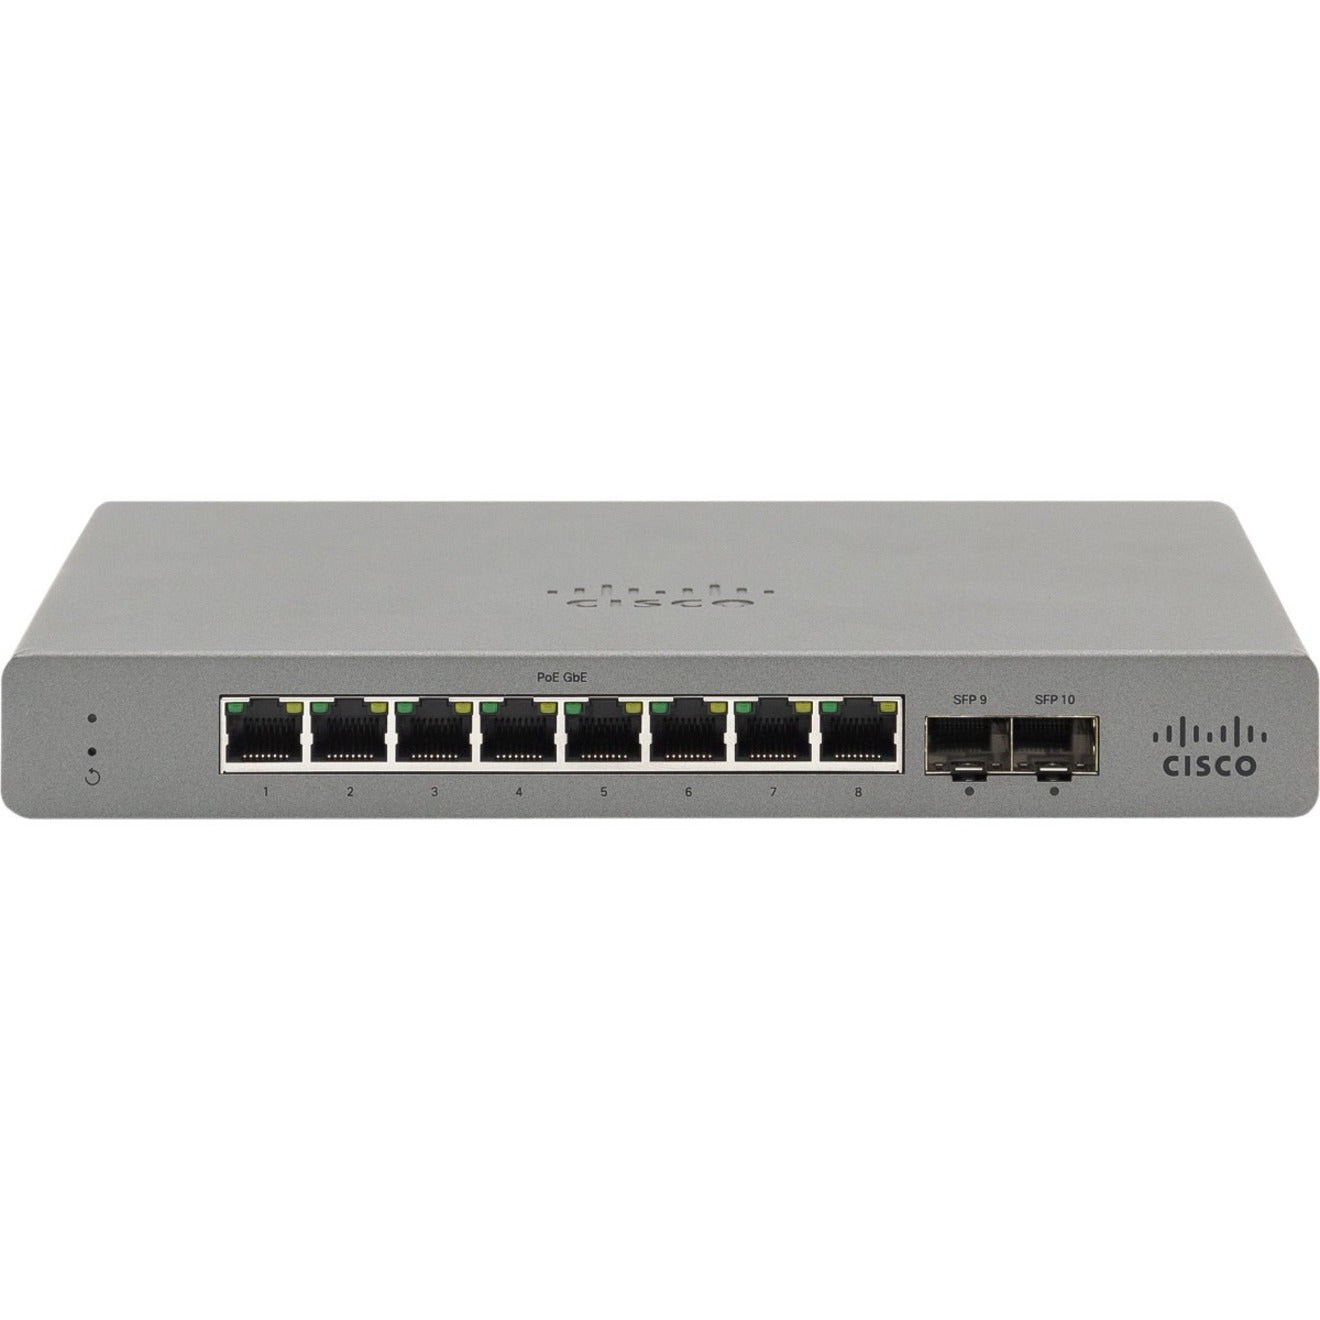 Meraki GS110-8P-HW-US Go Network Switch, 8 Port POE, Gigabit Ethernet, US Power